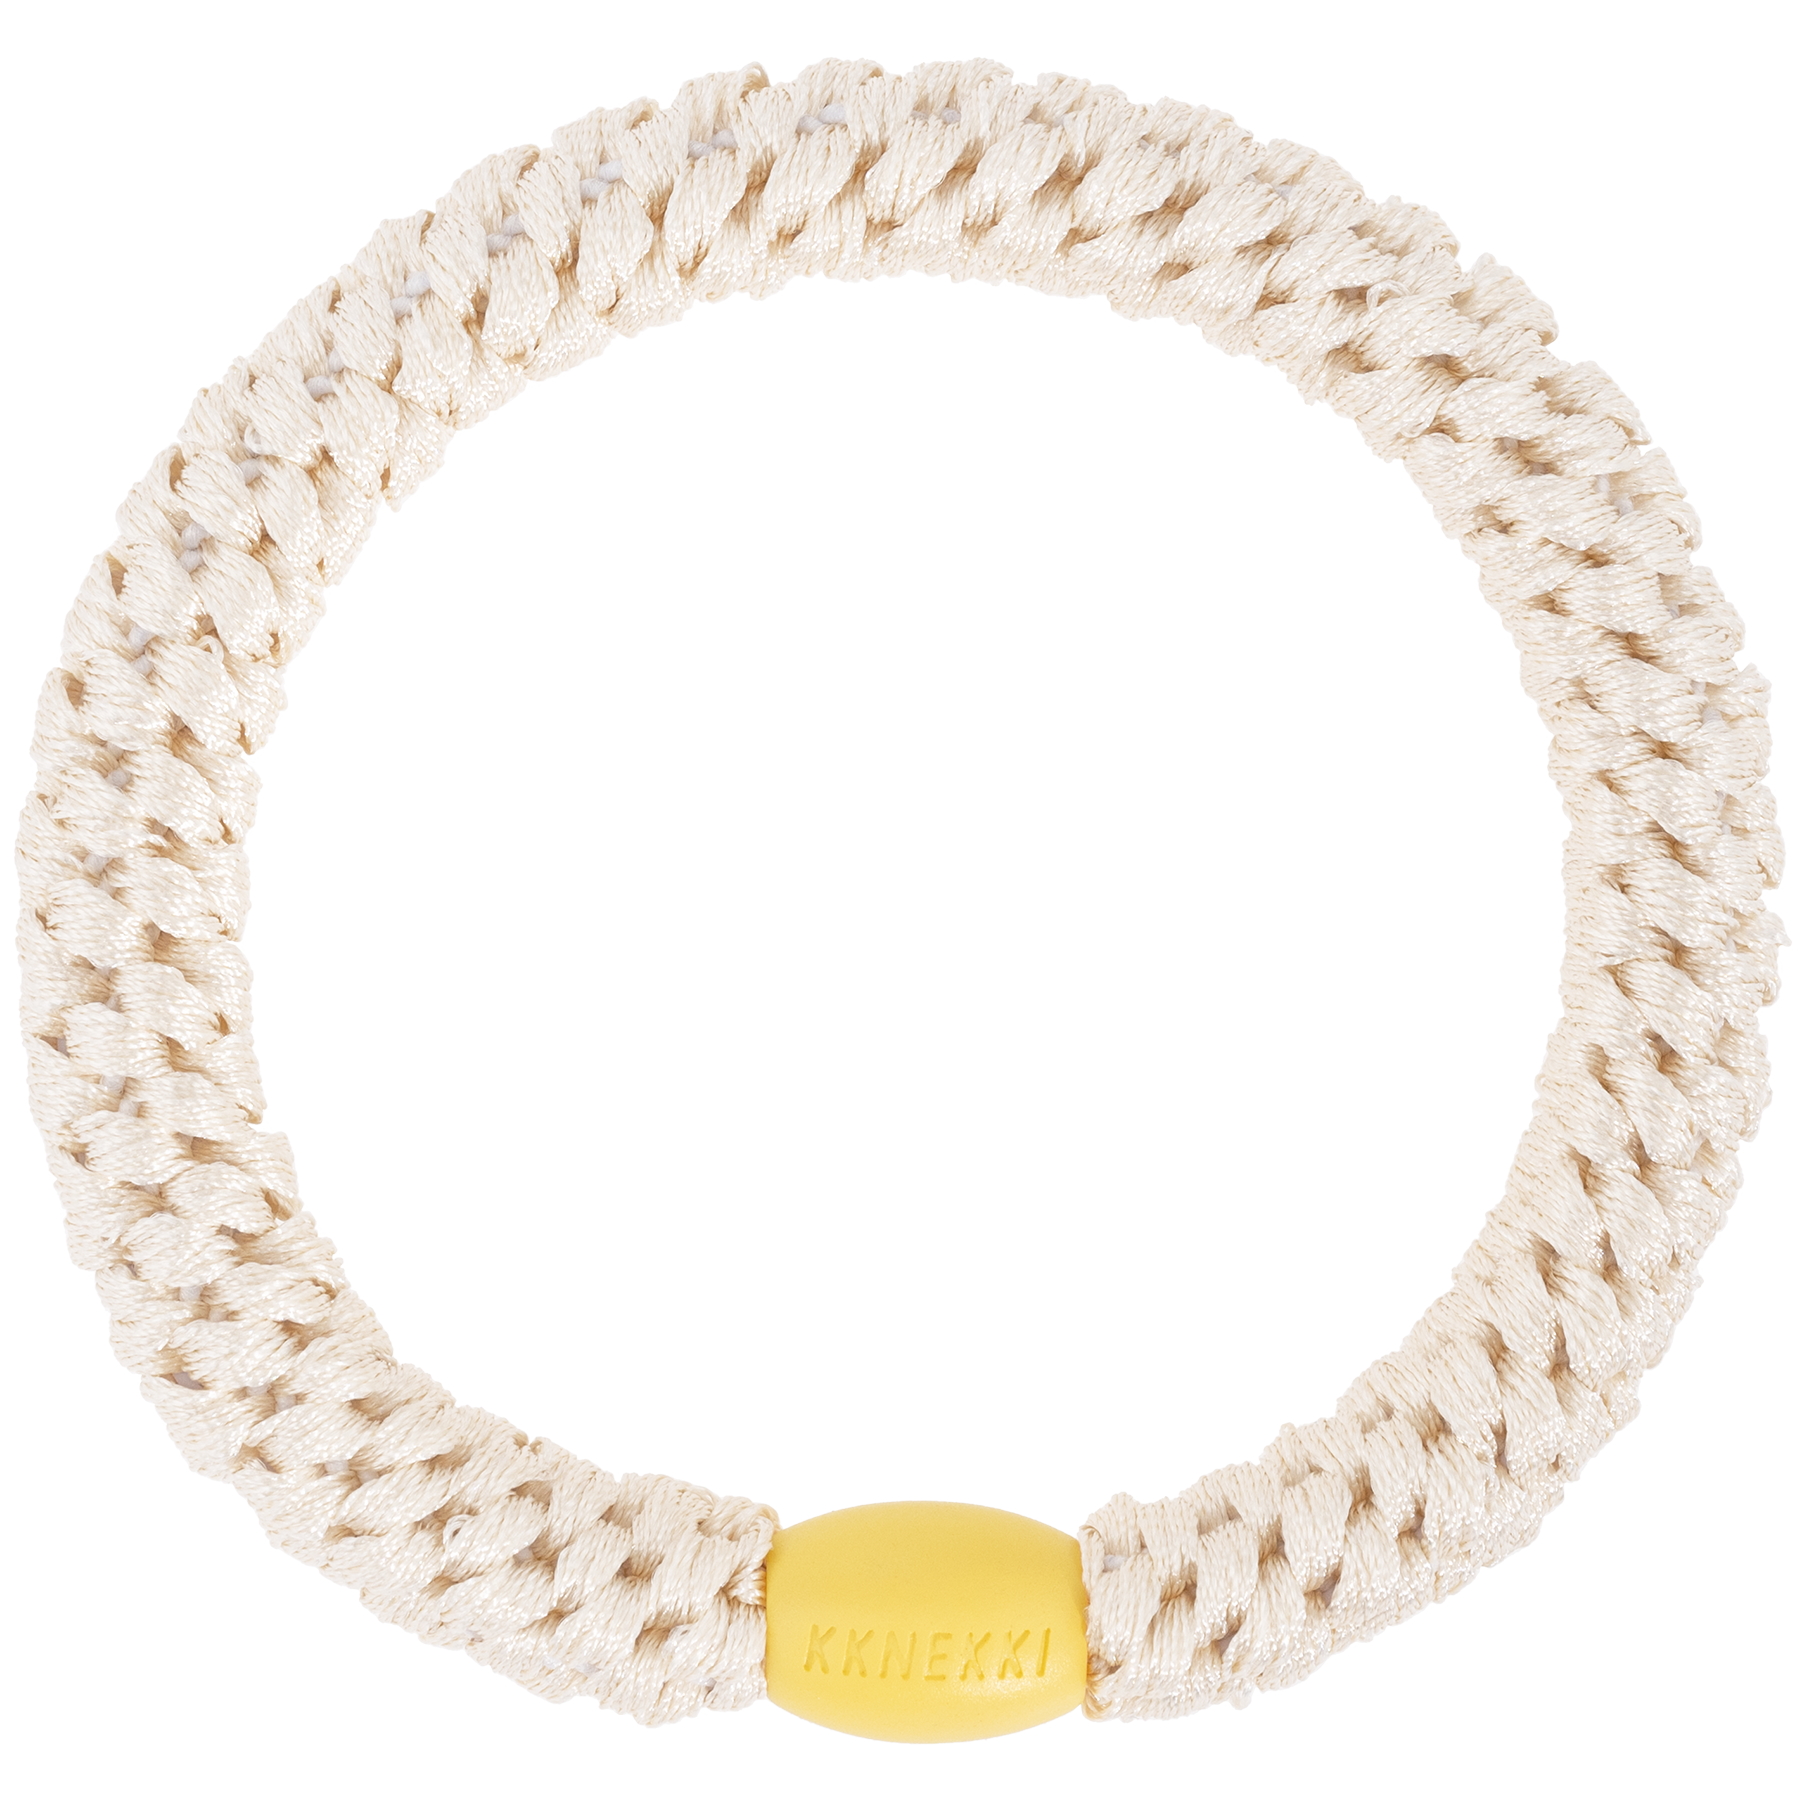 Image of Kknekki Ivory yellow bead  from Kknekki original hair ties